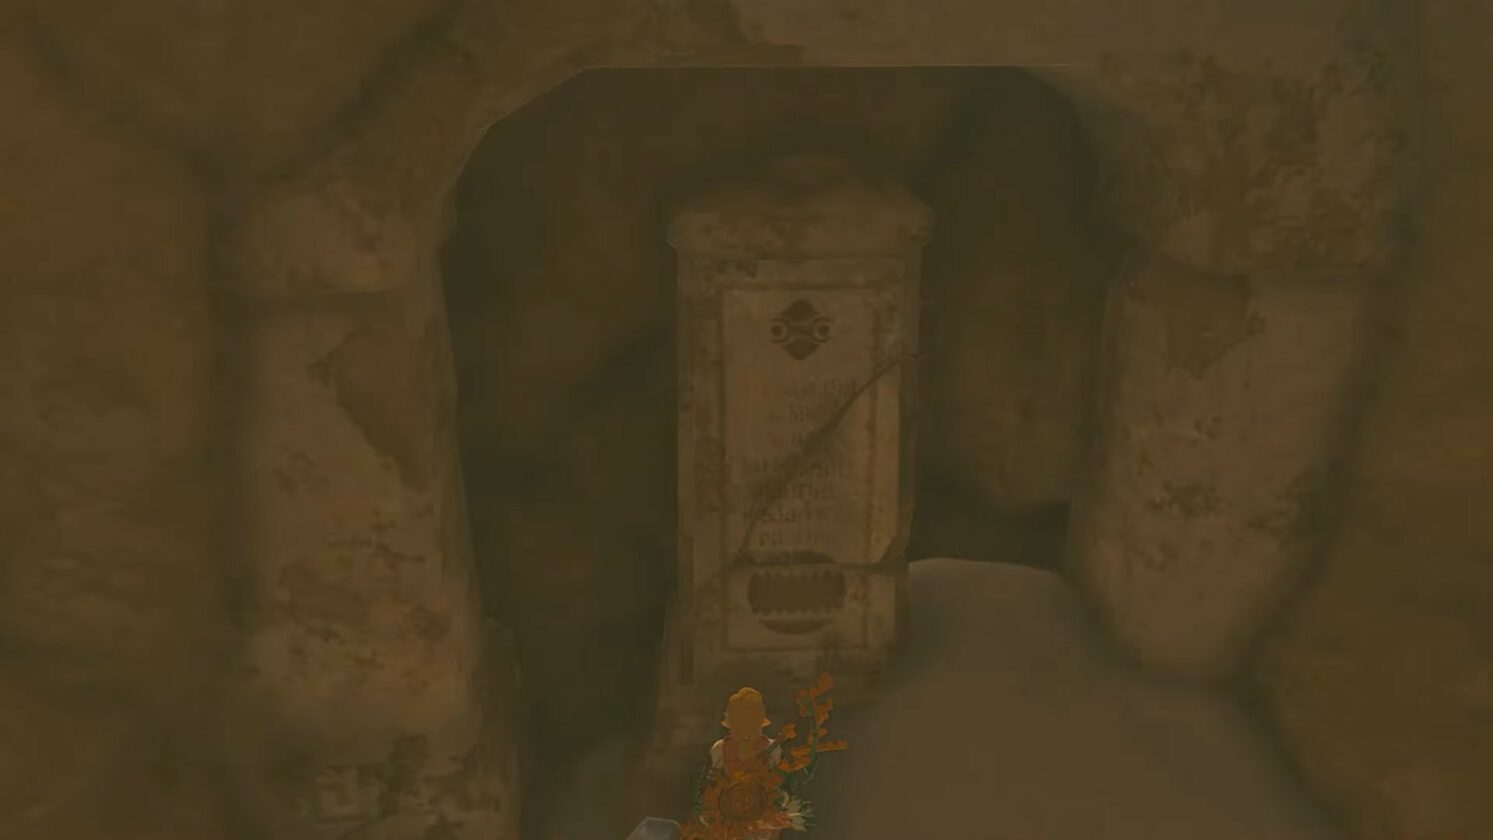 Stelae 2 location in the Zelda's Heroine's Secret quest